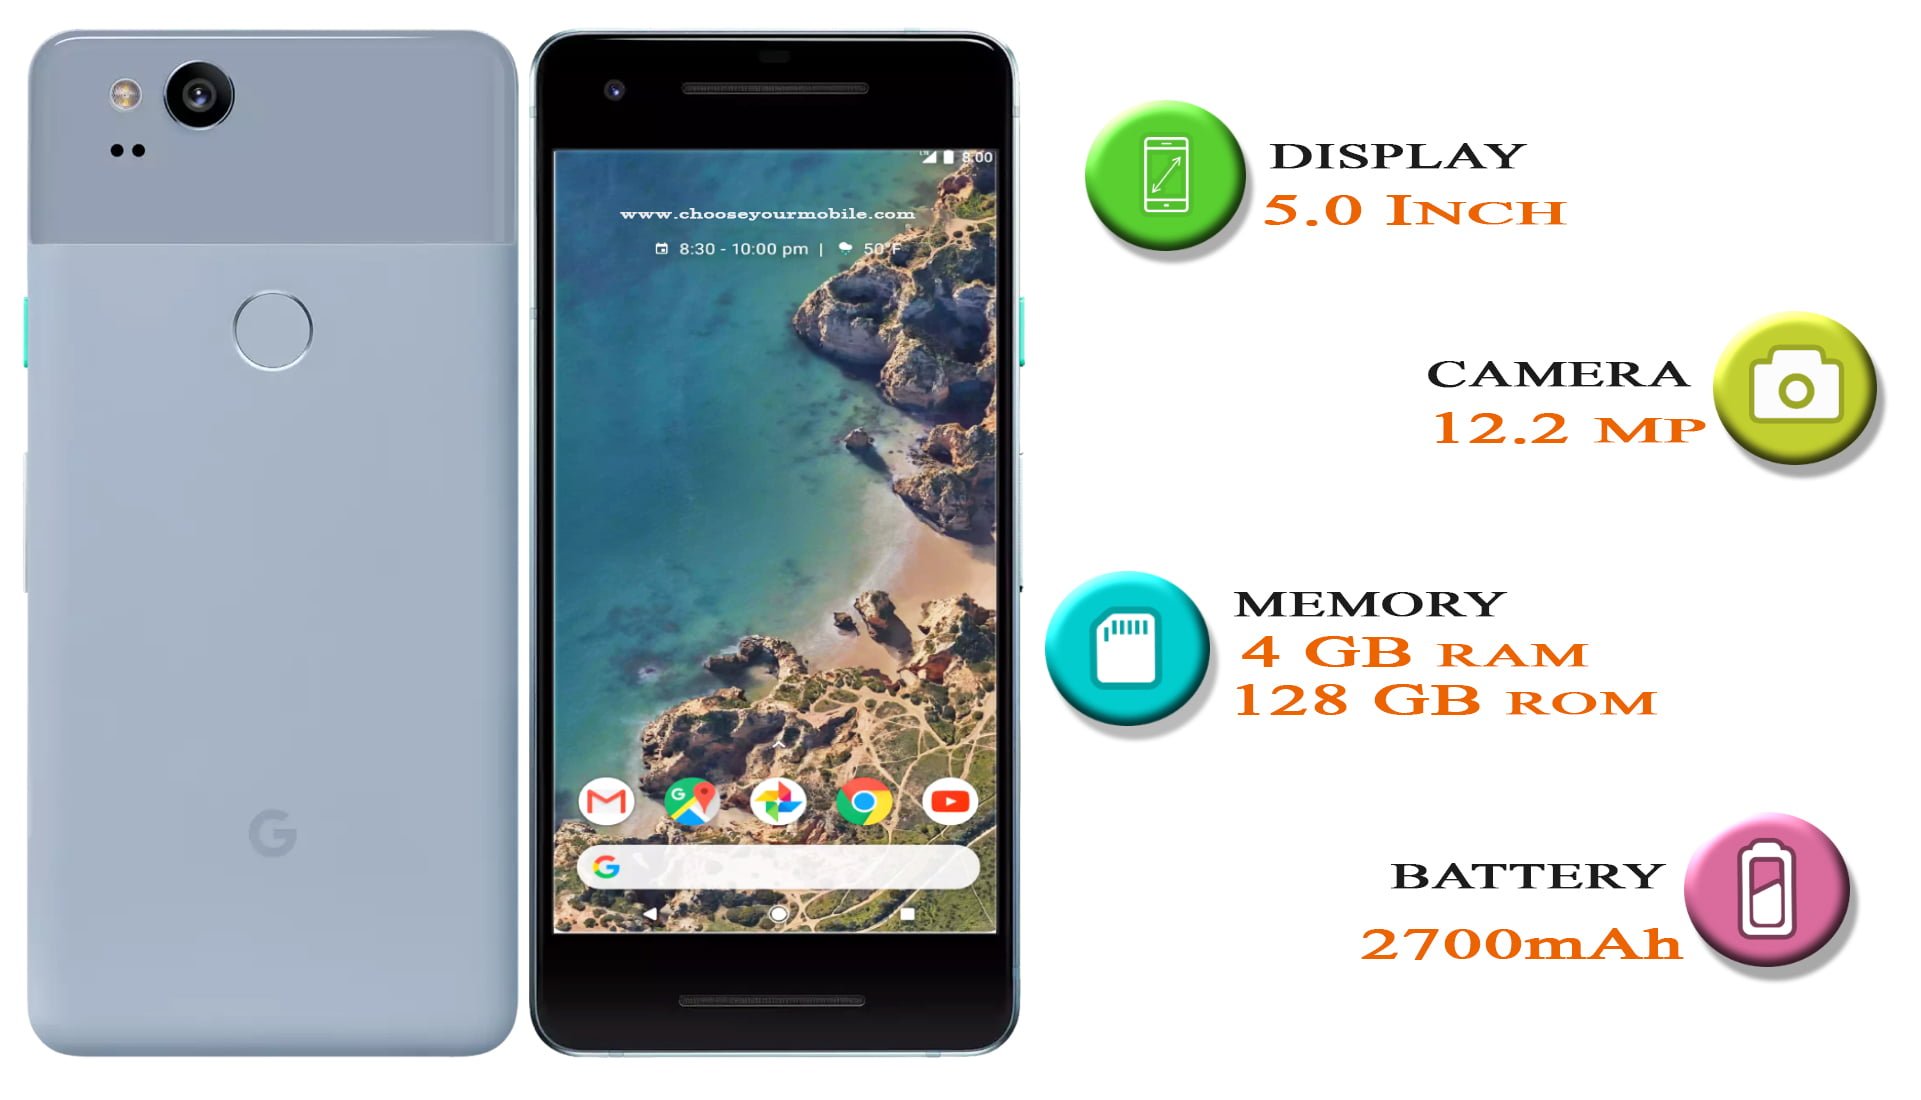 google pixel 2 , pixel 2 images, pixel 2 specifications, google mobile, latest mobile